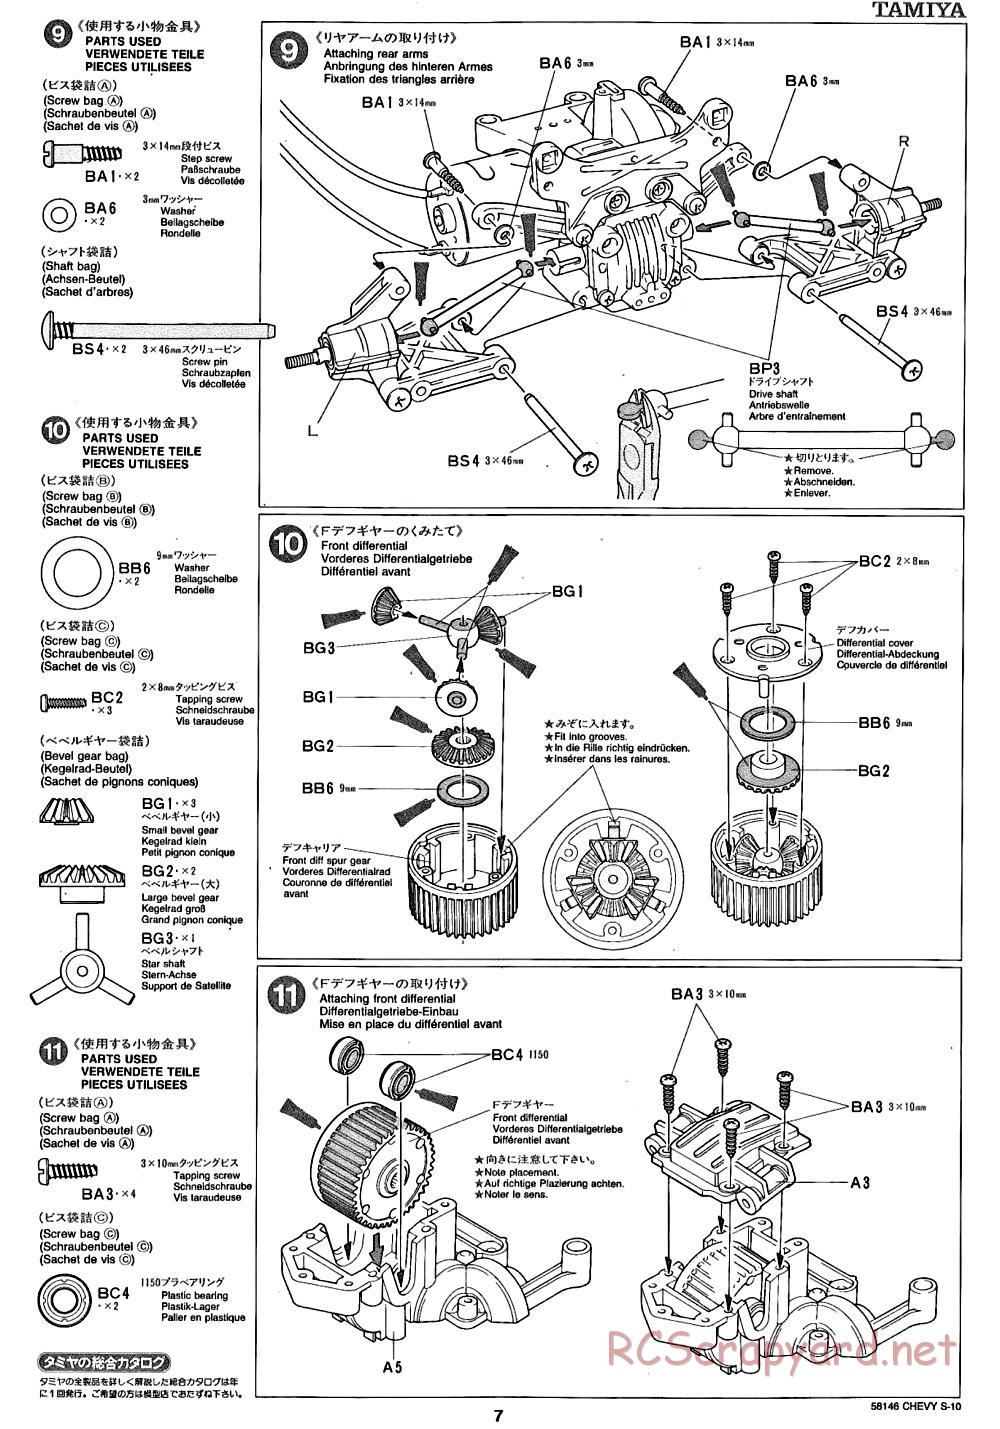 Tamiya - Chevy S-10 Chassis - Manual - Page 7